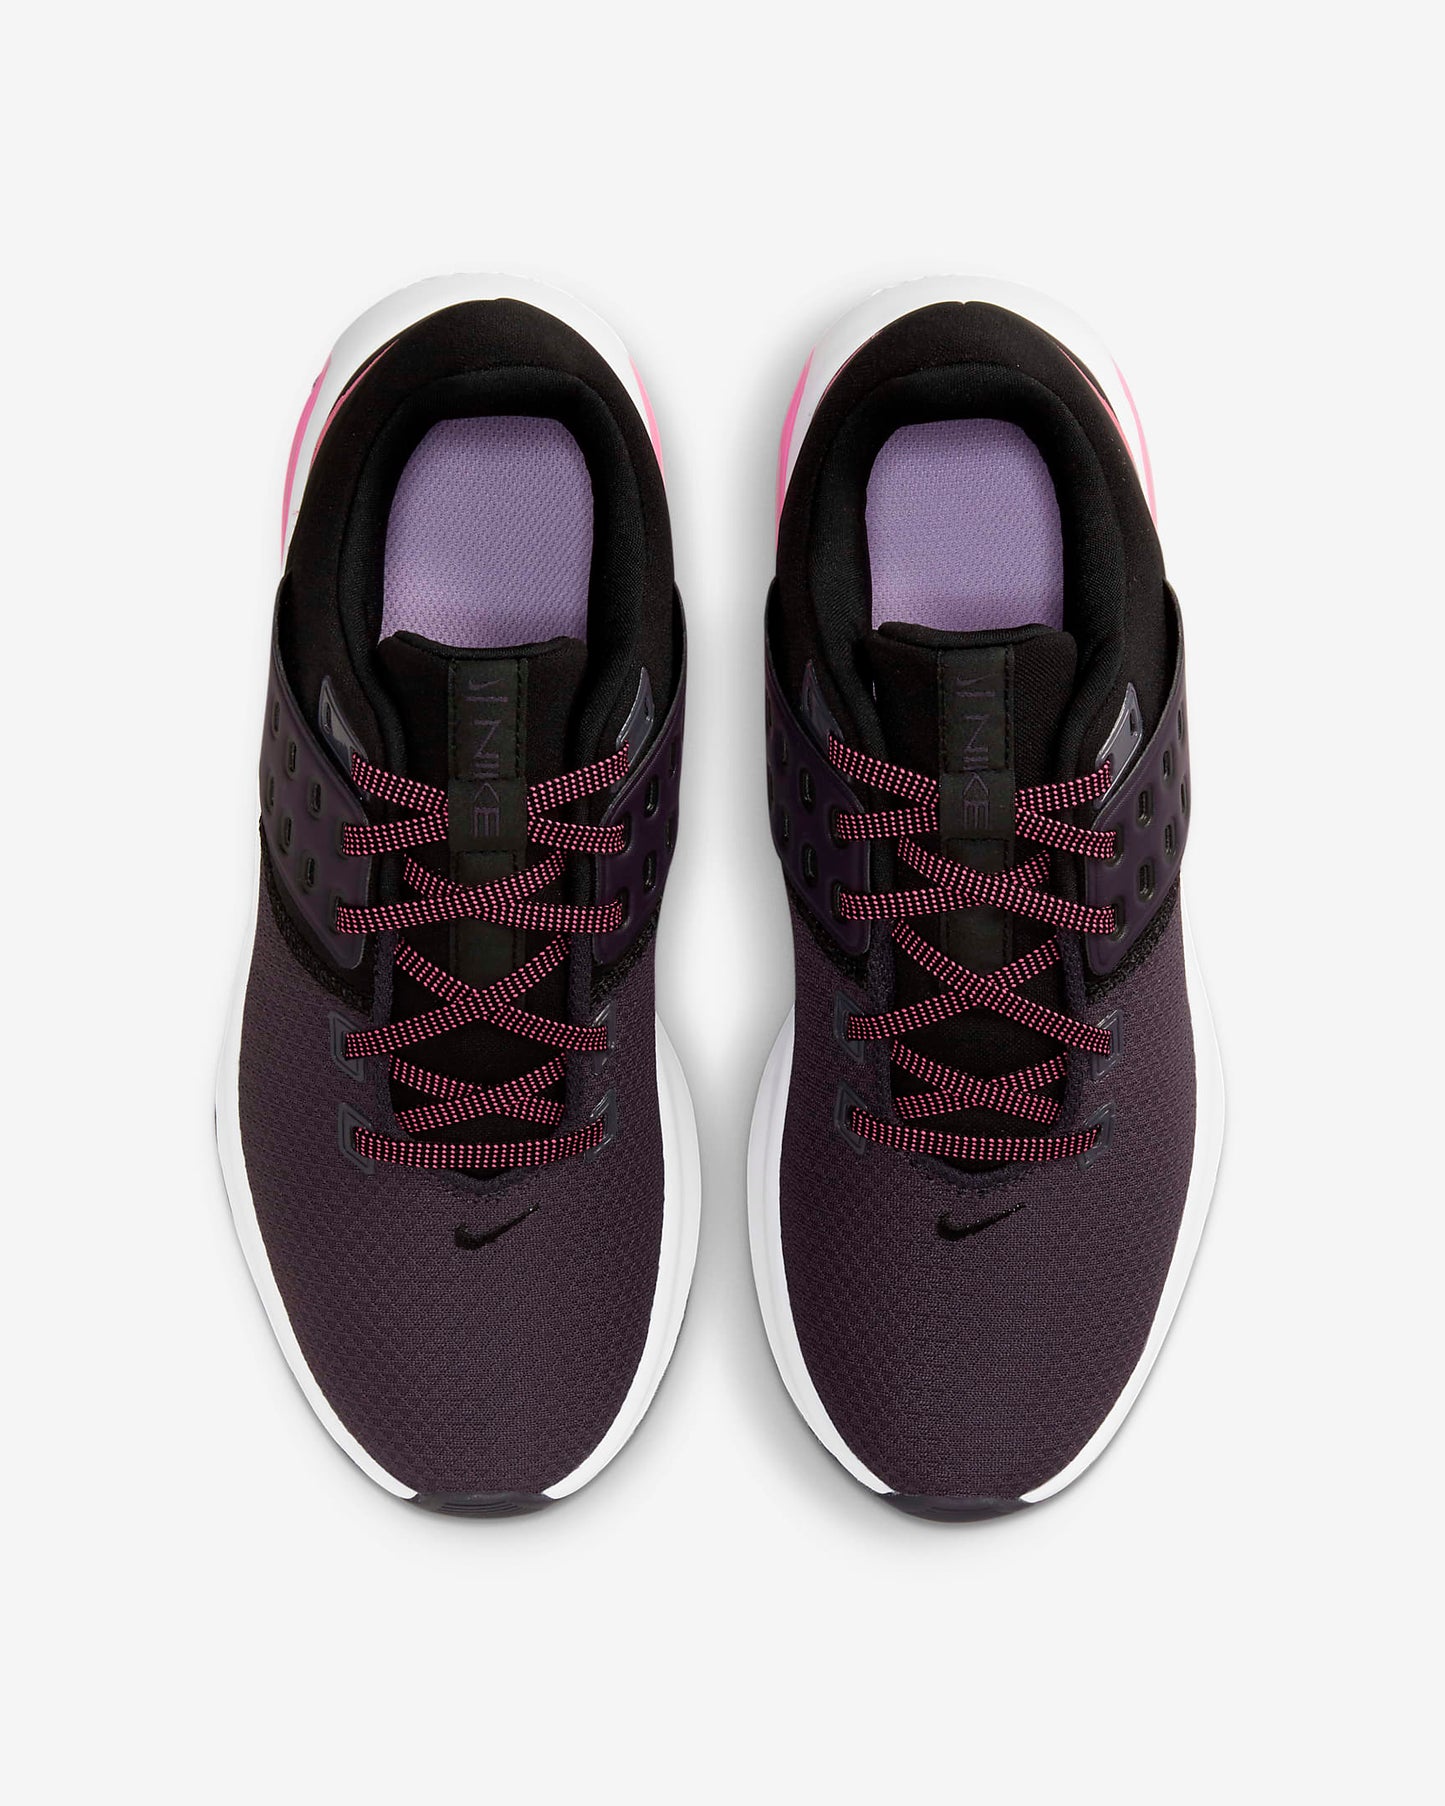 Nike Women's Air Max Bella TR 4 Workout Shoes, Black/Cave Purple/White/Hyper Pink